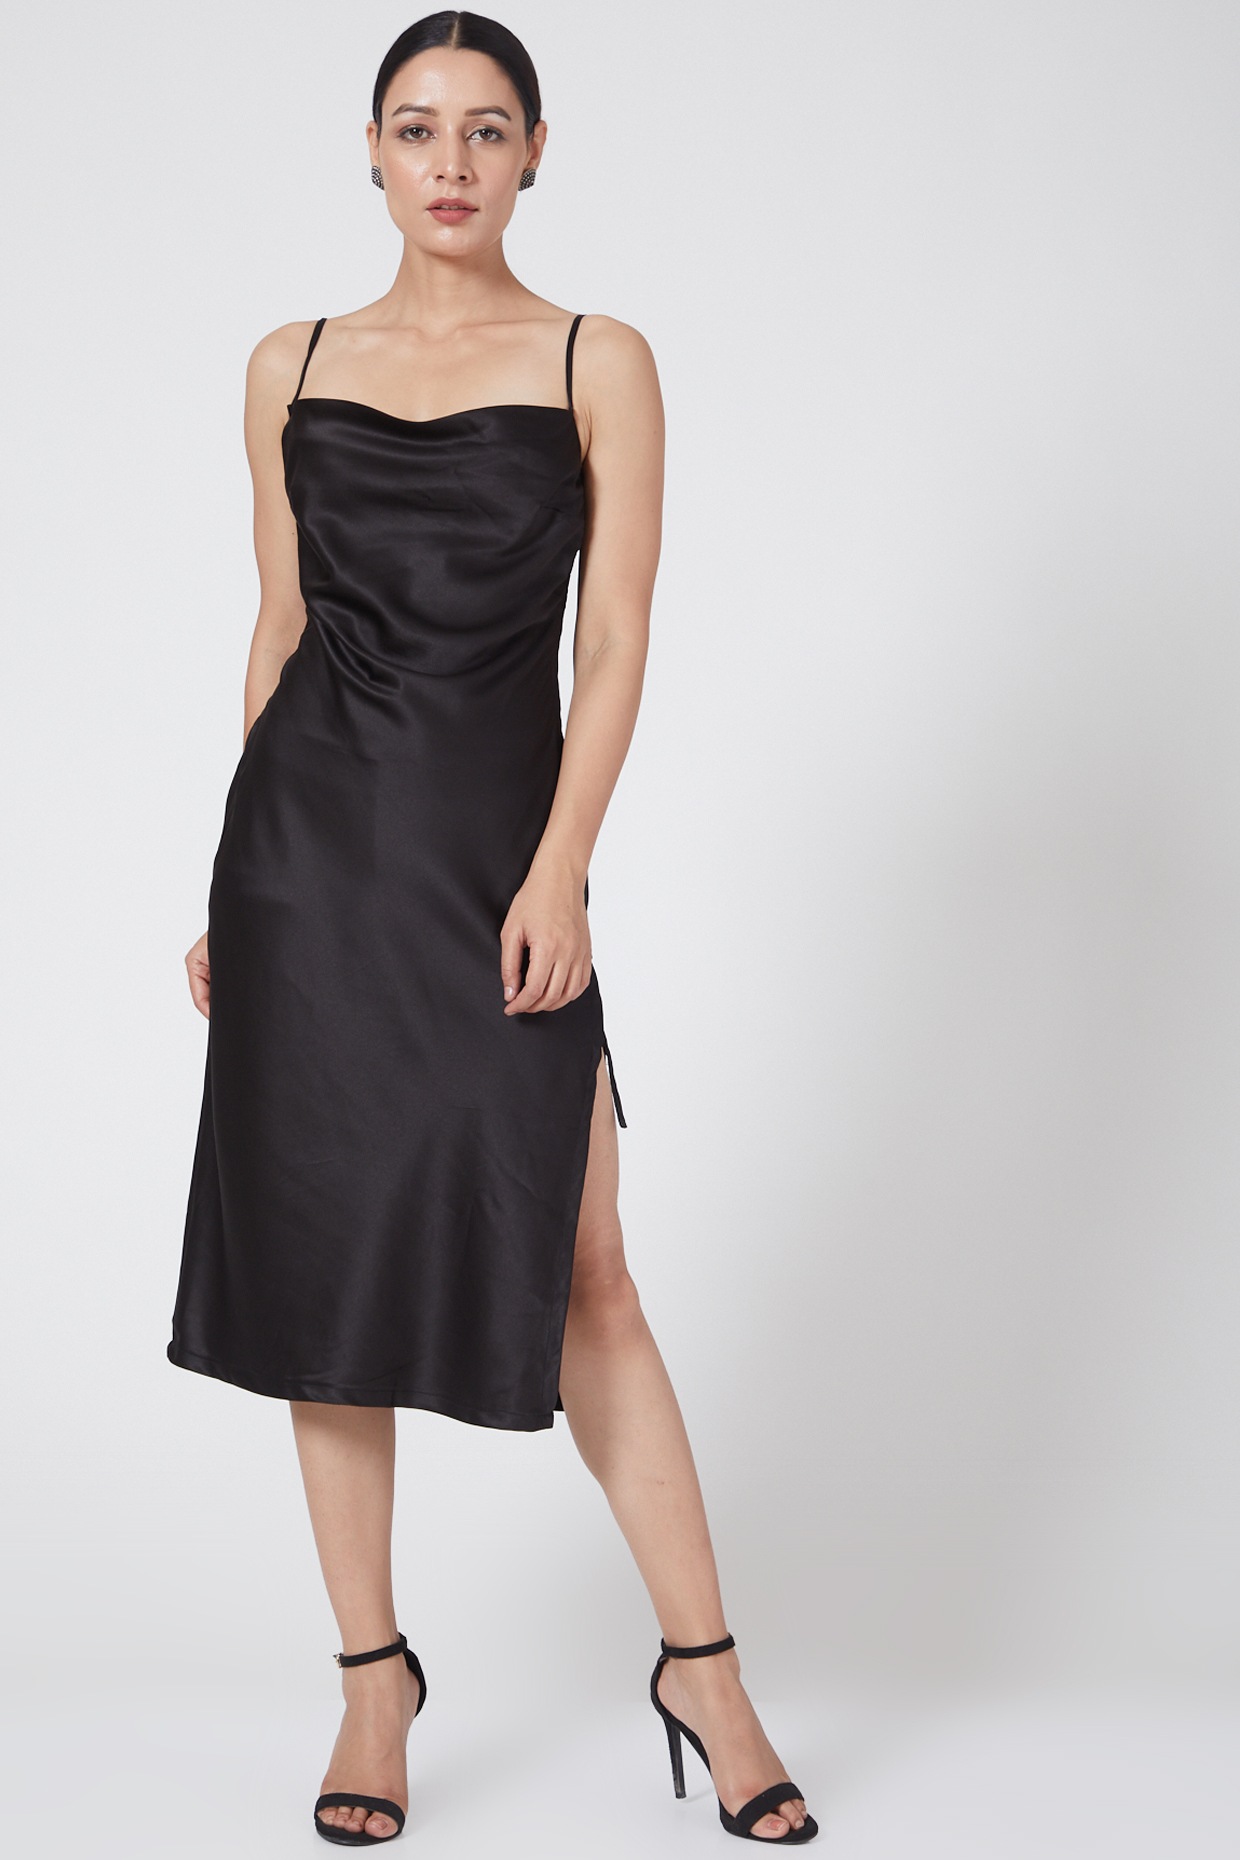 Black Satin Slip Dress Design by Three ...